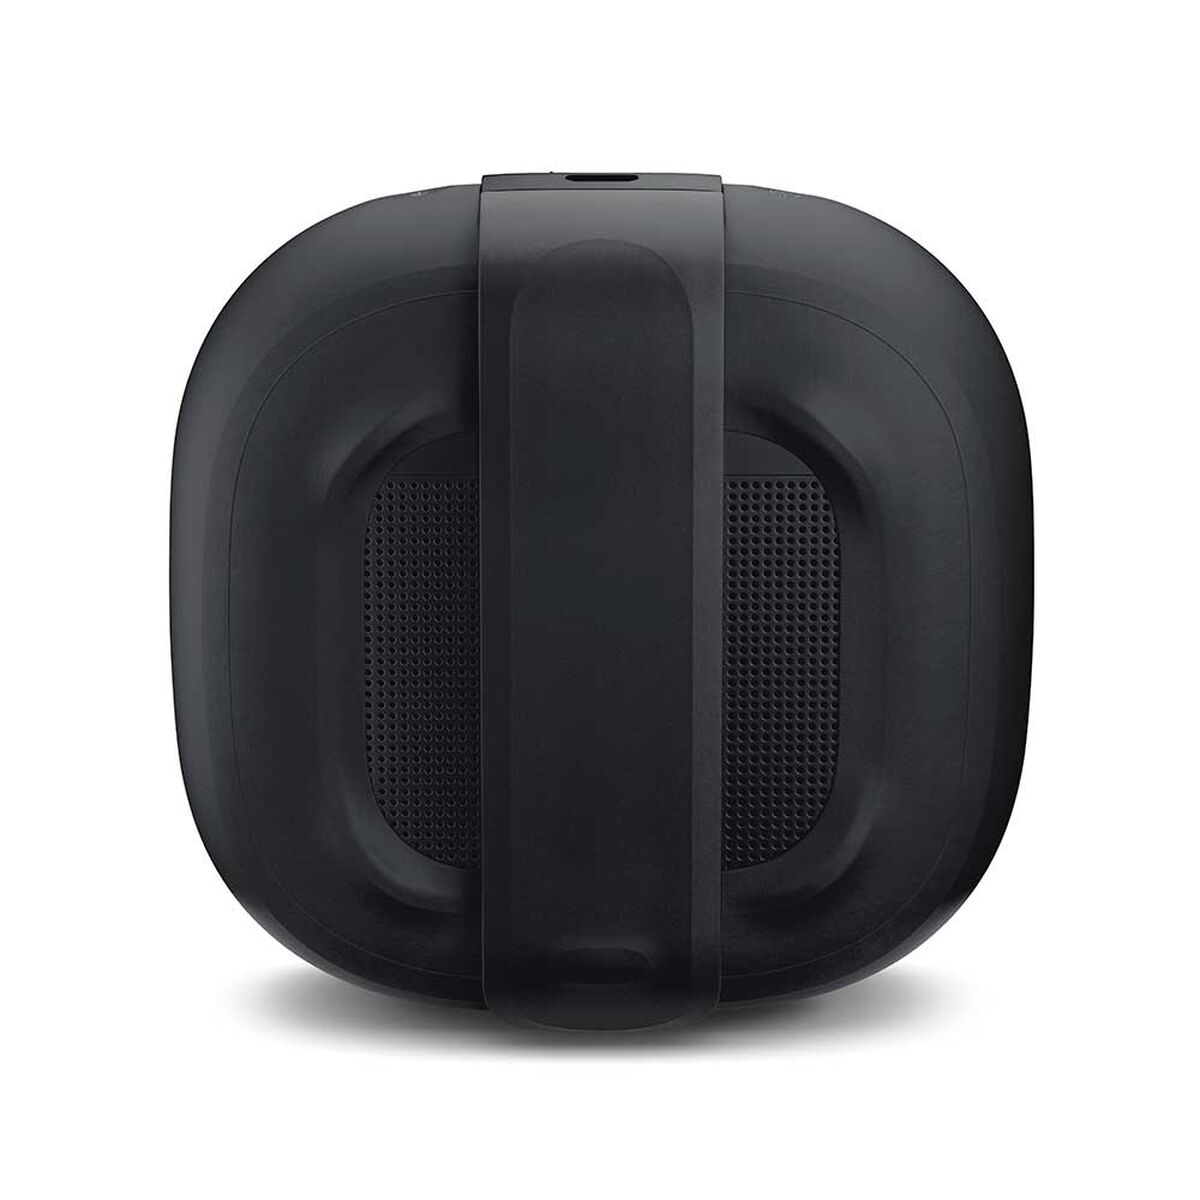 Parlante Bluetooth Bose SoundLink Micro Negro